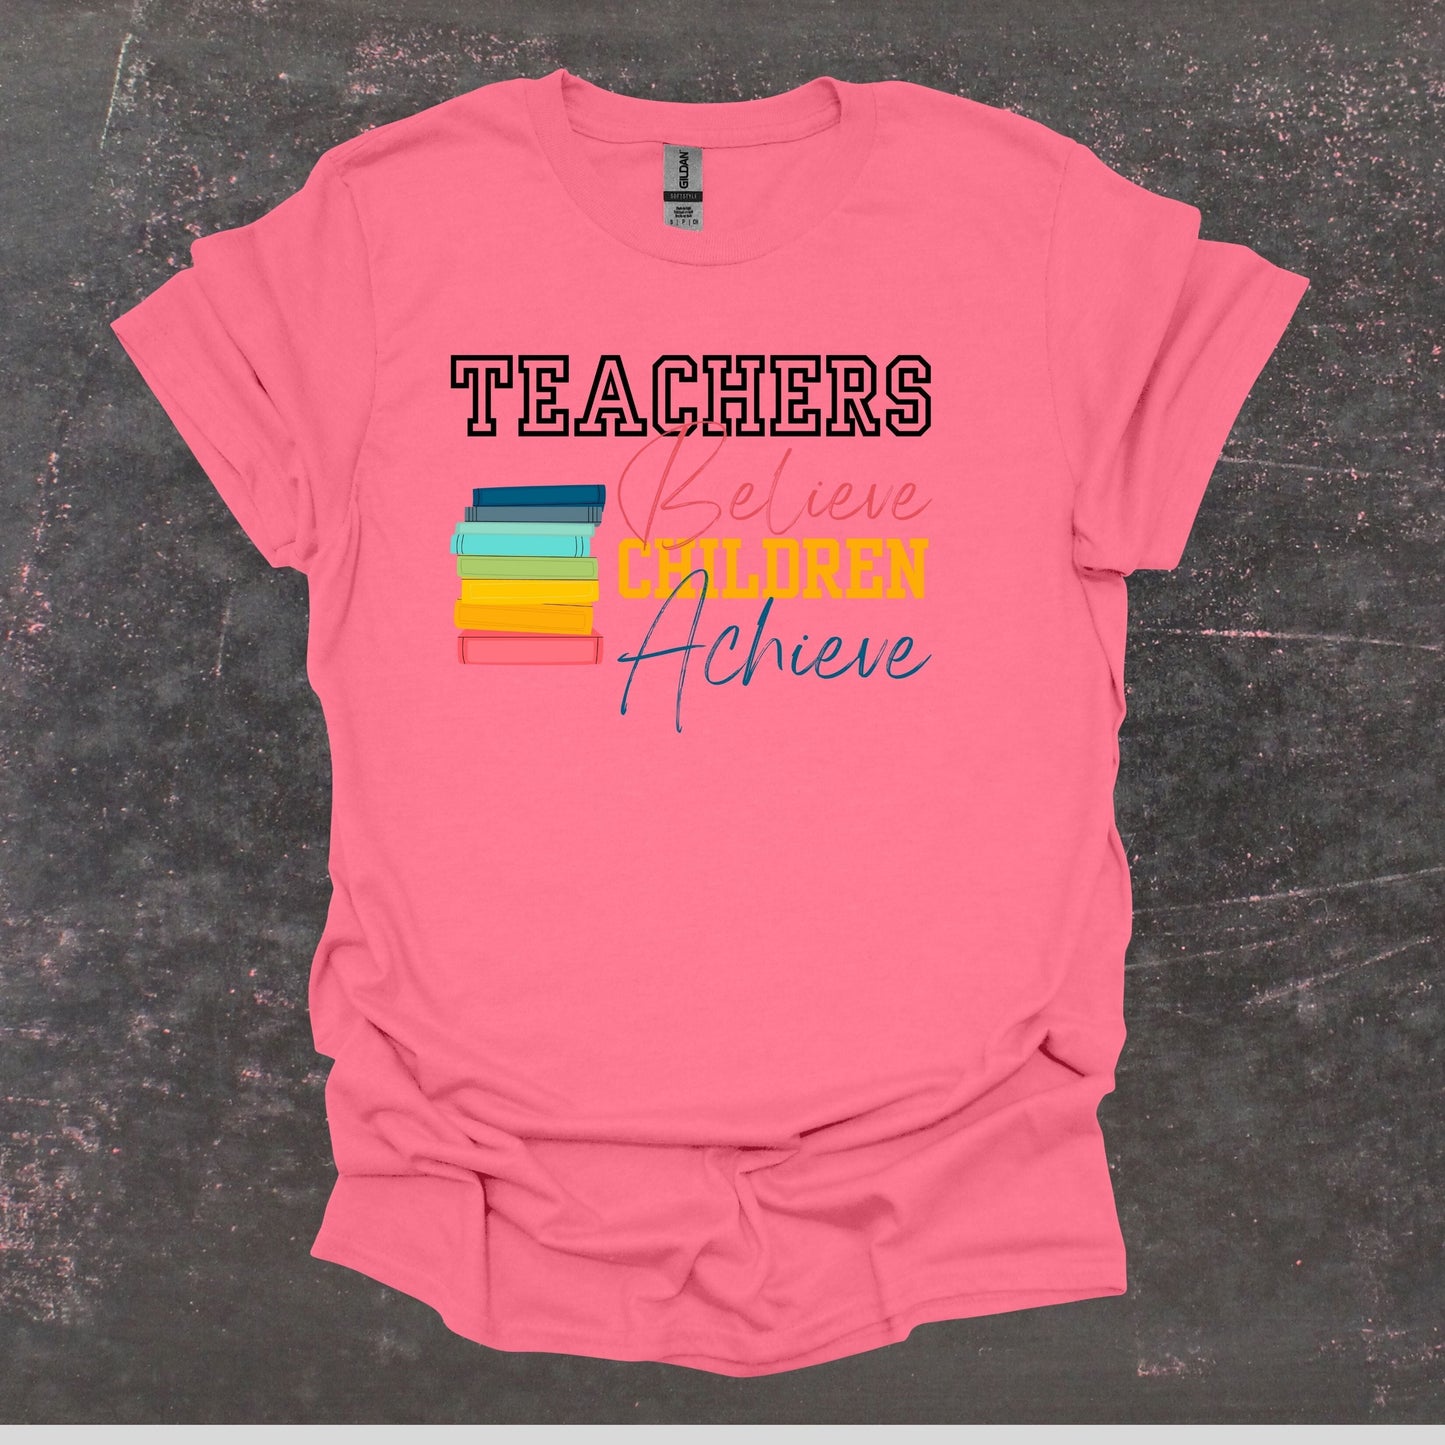 Teachers Believe Children Achieve - Teacher T Shirt - Adult Tee Shirts T-Shirts Graphic Avenue Coral Silk Adult Small 